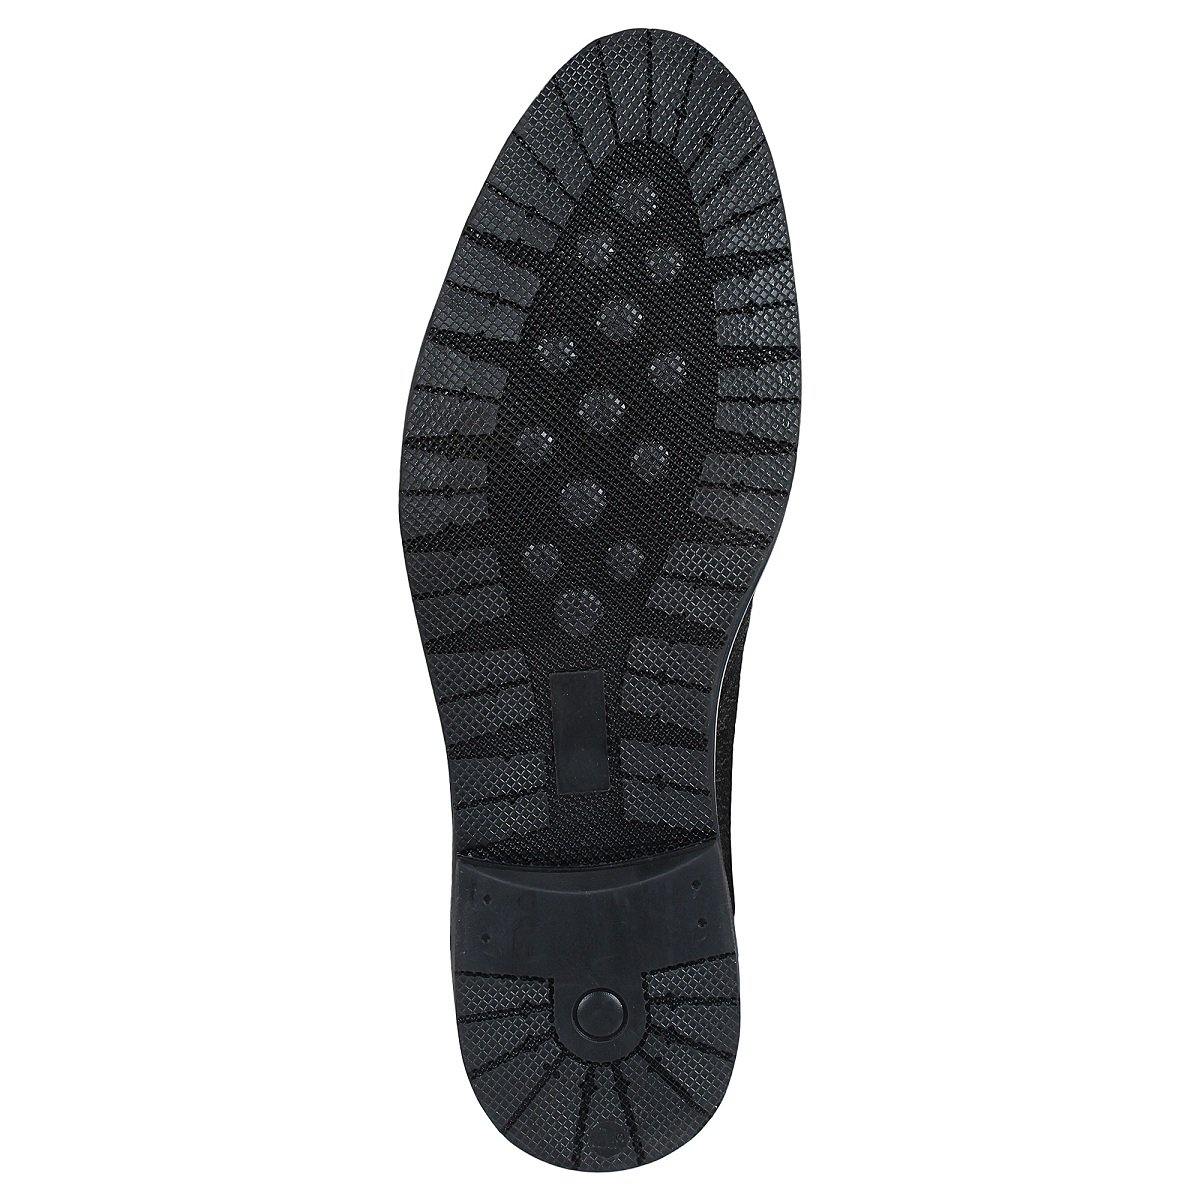 SeeandWear Brown Formal Shoes for Men - Minor Defect - SeeandWear